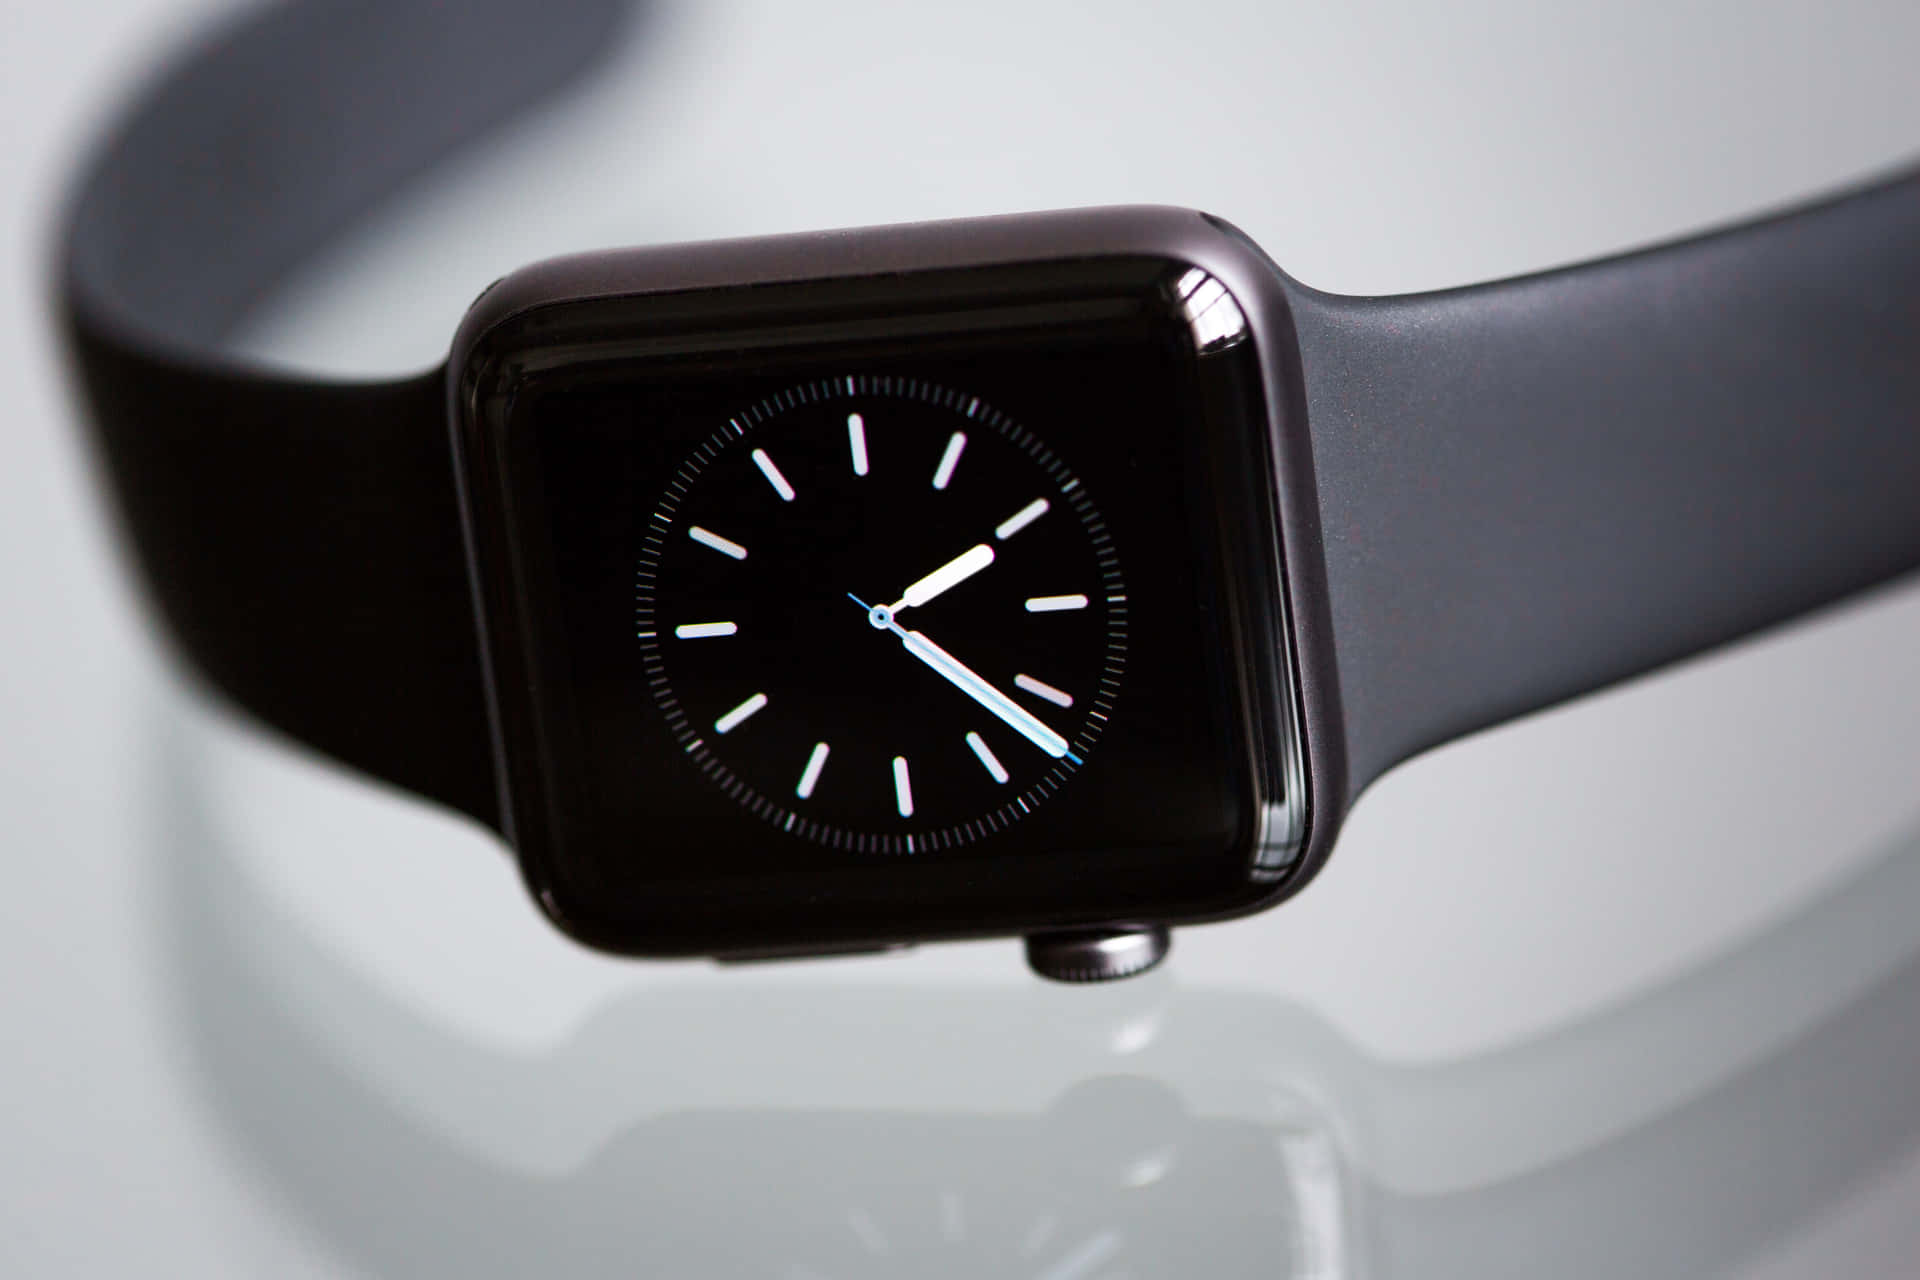 Applewatch - Den Seneste Inden For Smartwatch-teknologi